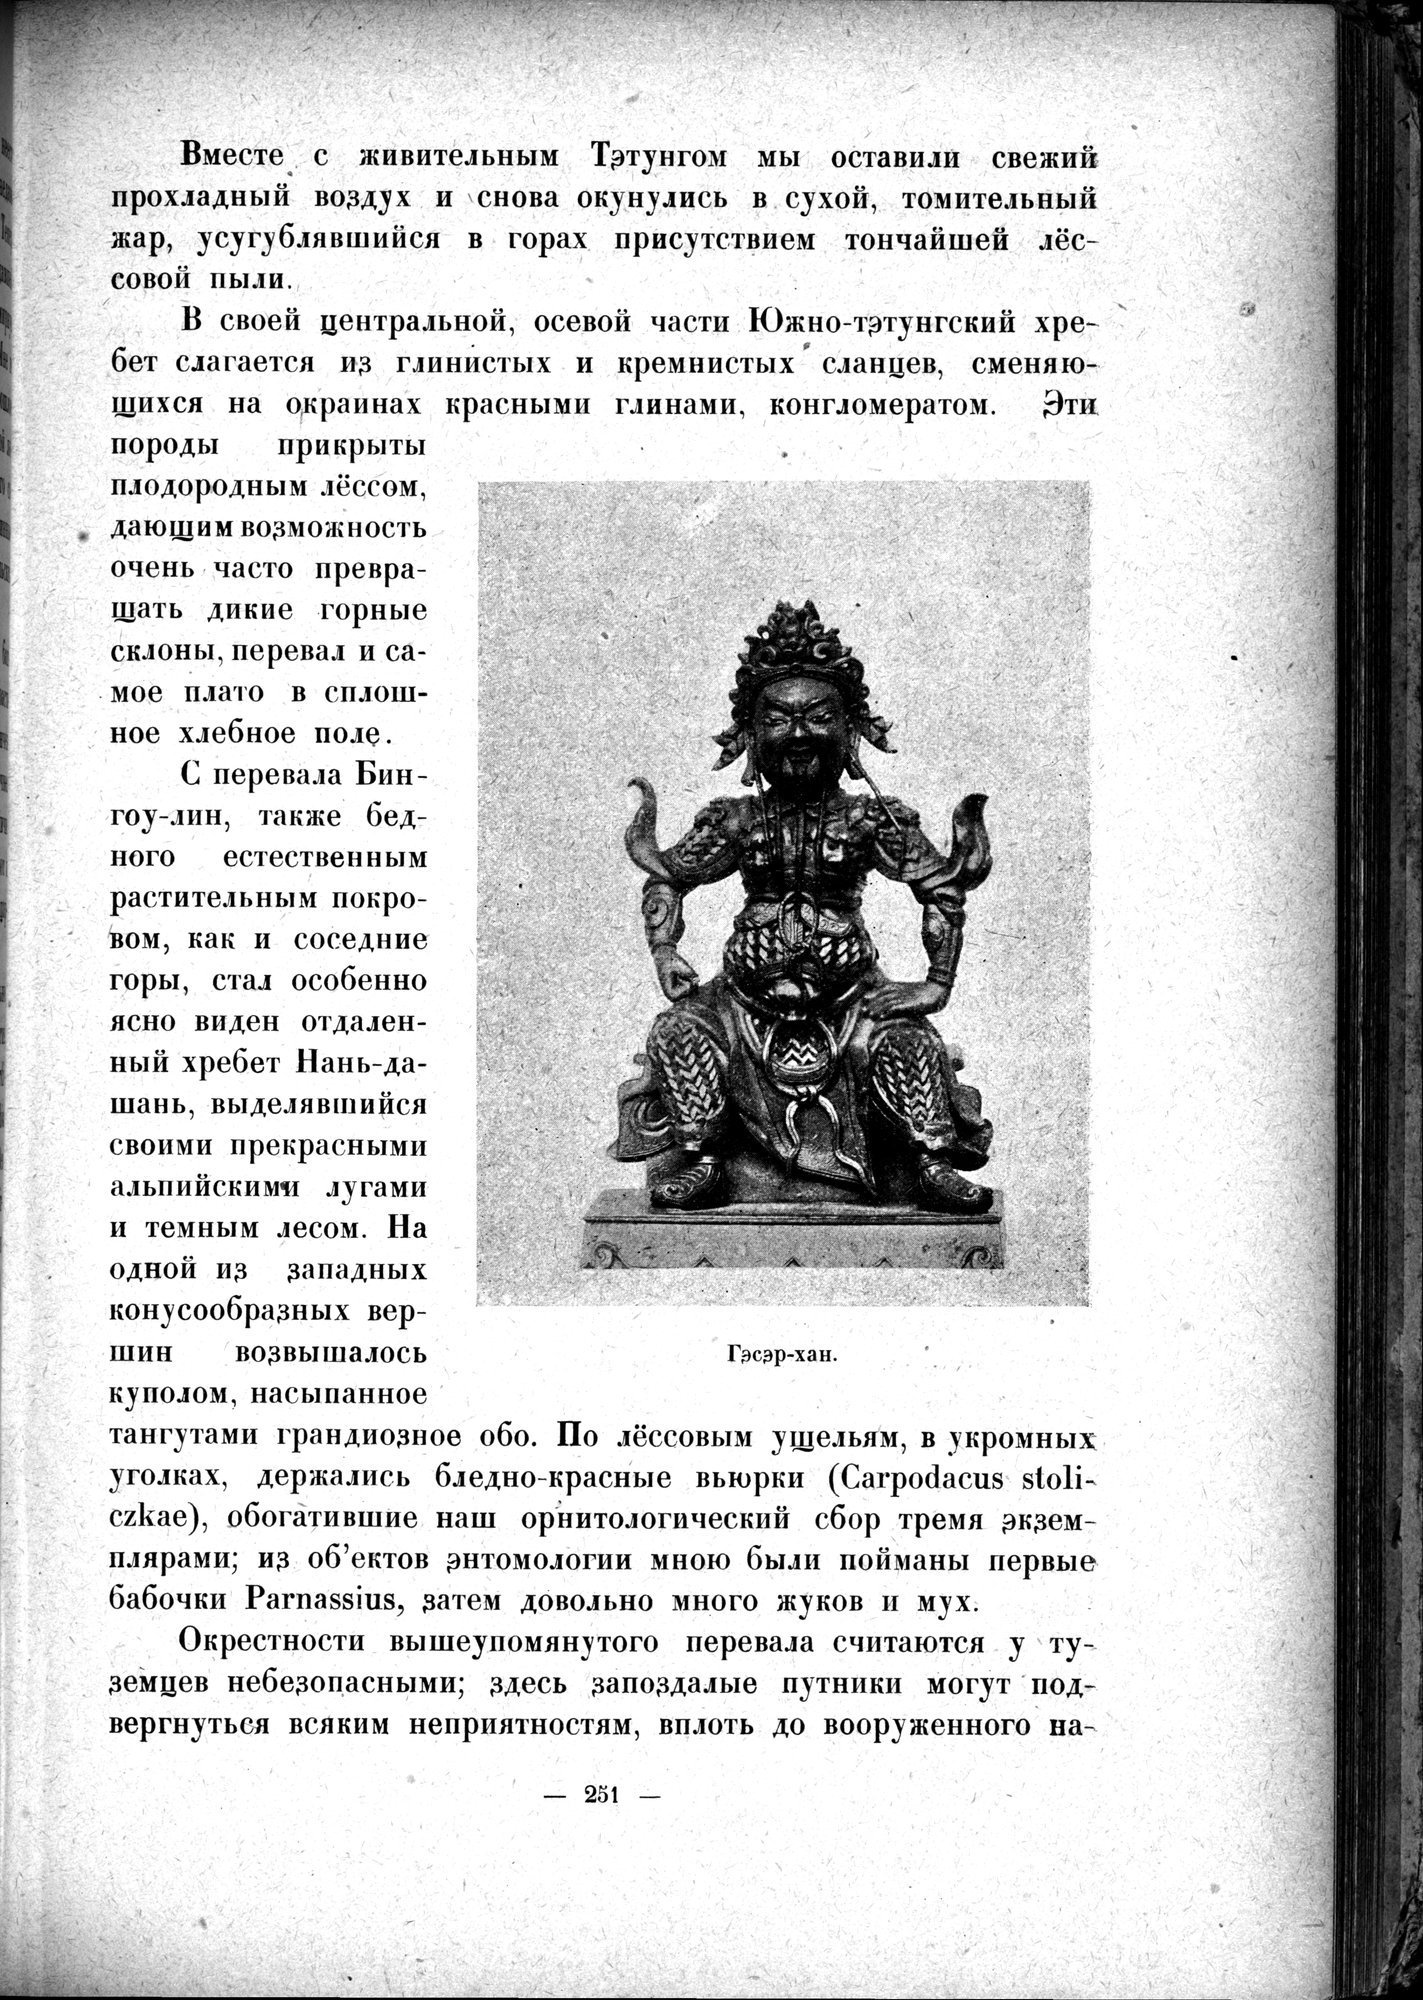 Mongoliya i Amdo i mertby gorod Khara-Khoto : vol.1 / Page 297 (Grayscale High Resolution Image)